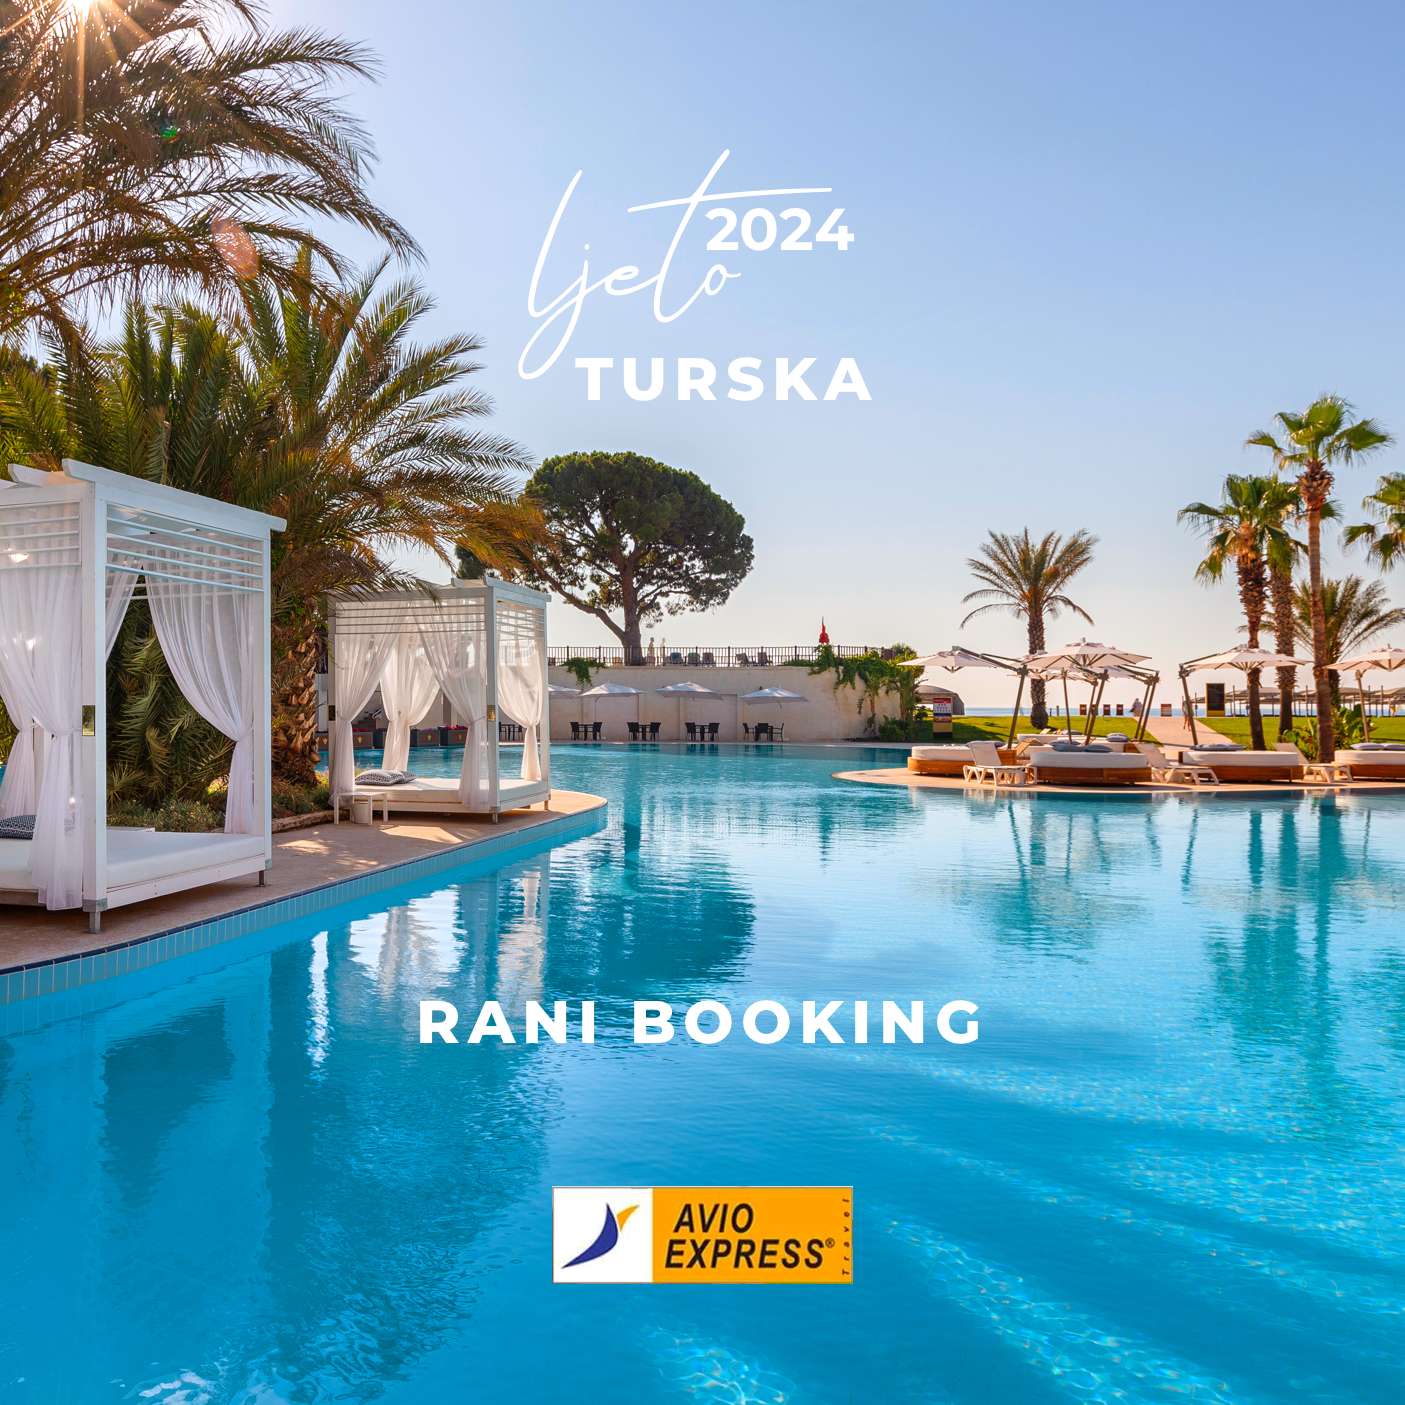 Antalya - Rani booking